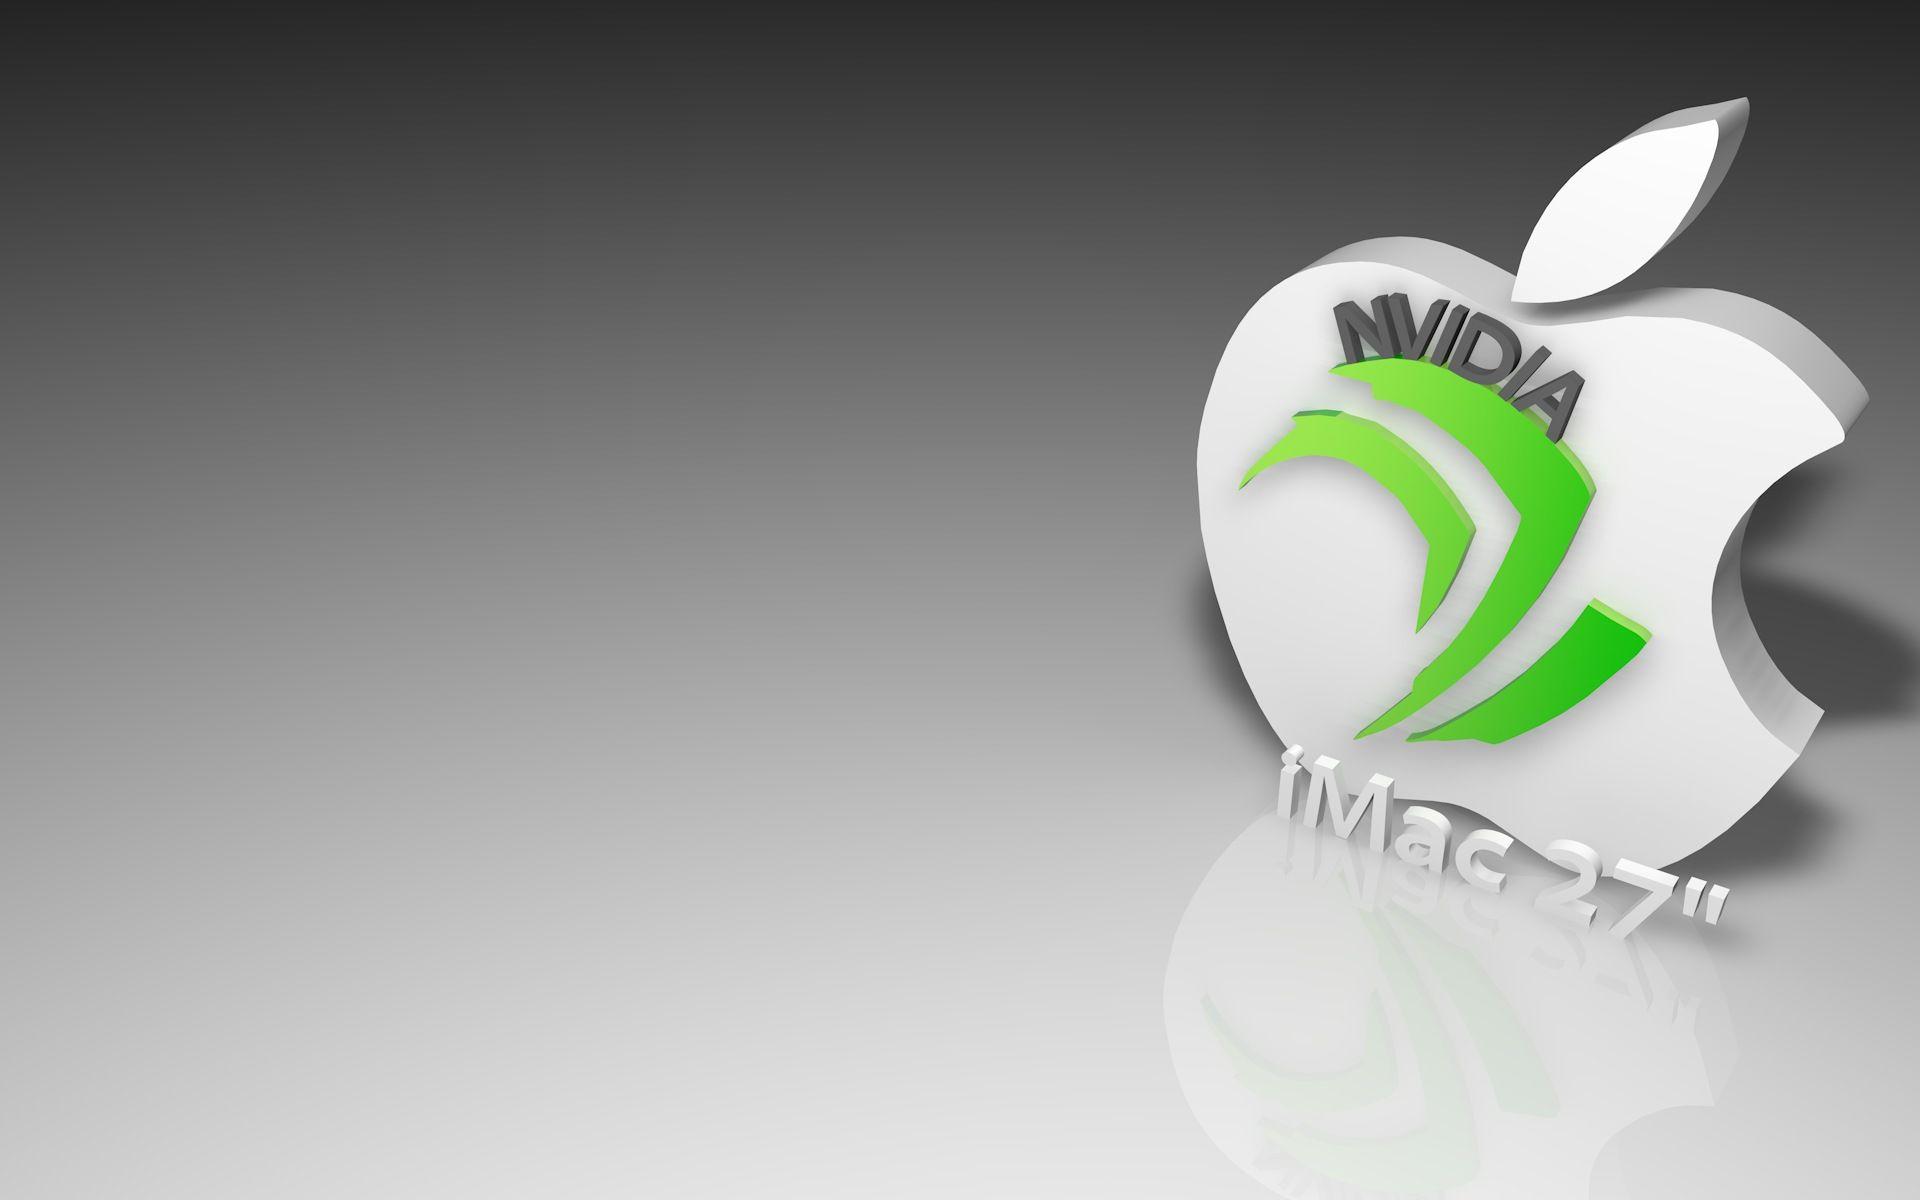 Wallpaper, logo, Cinema 4D, Nvidia, brand, imac, apple, hand